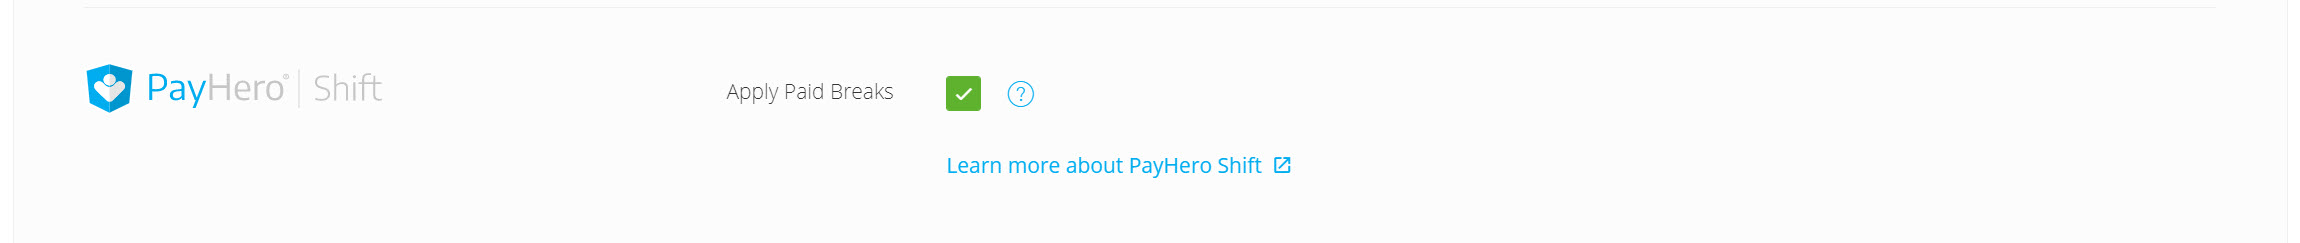 PayHero_Shift_Apply_Paid_Breaks.jpg